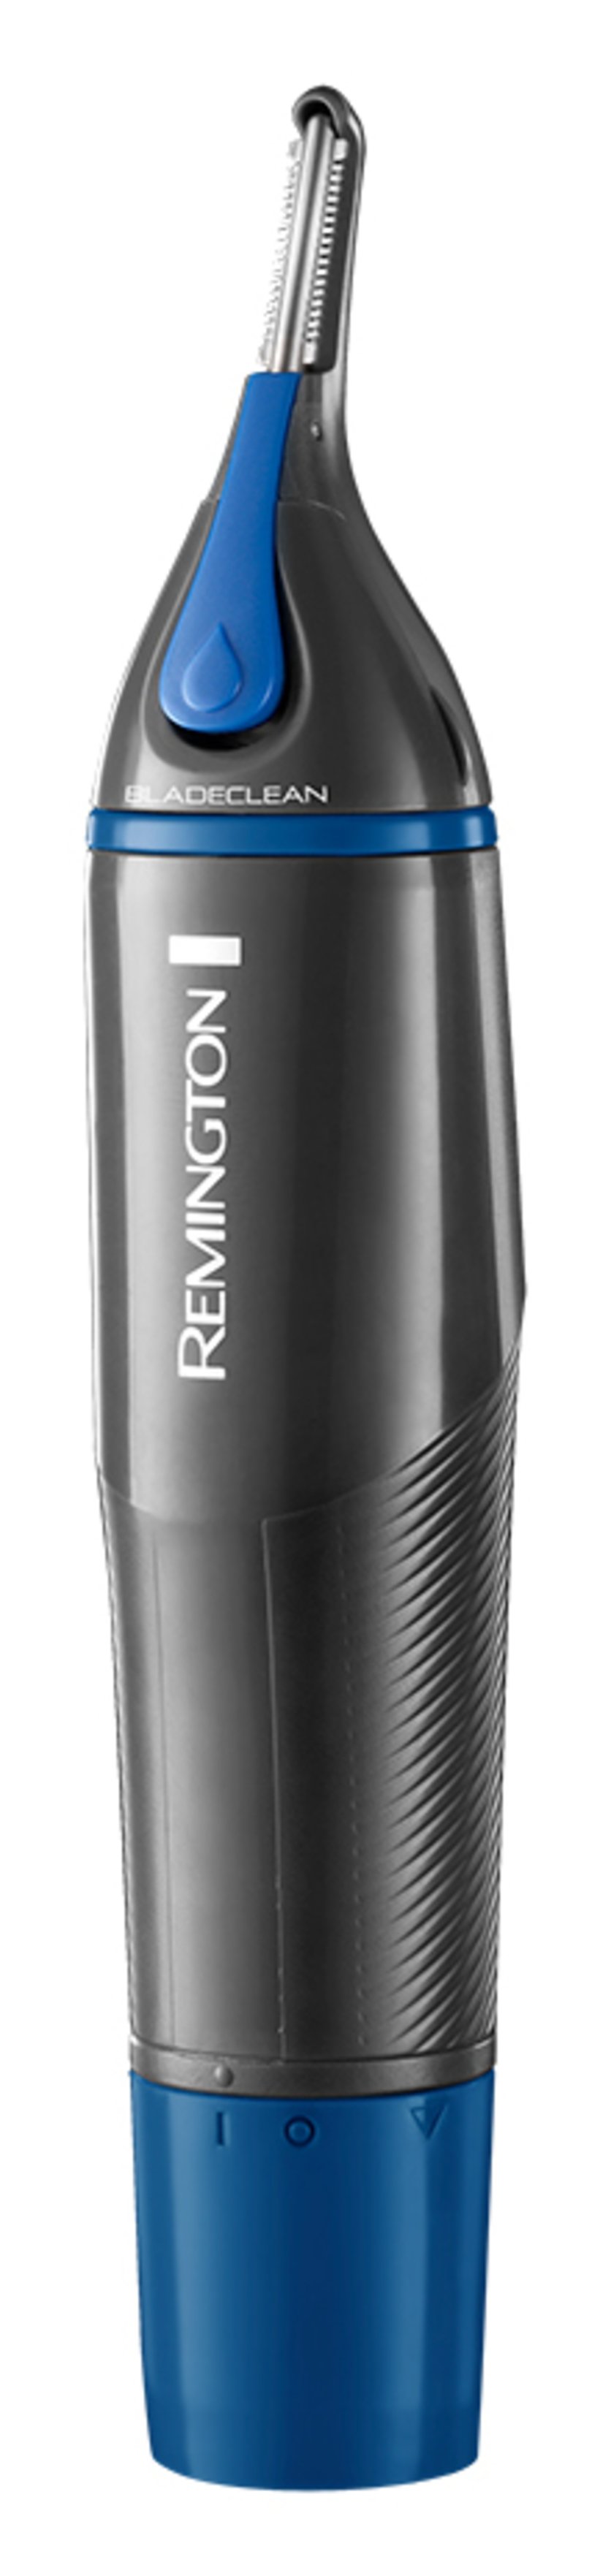 remington wet dry nose trimmer